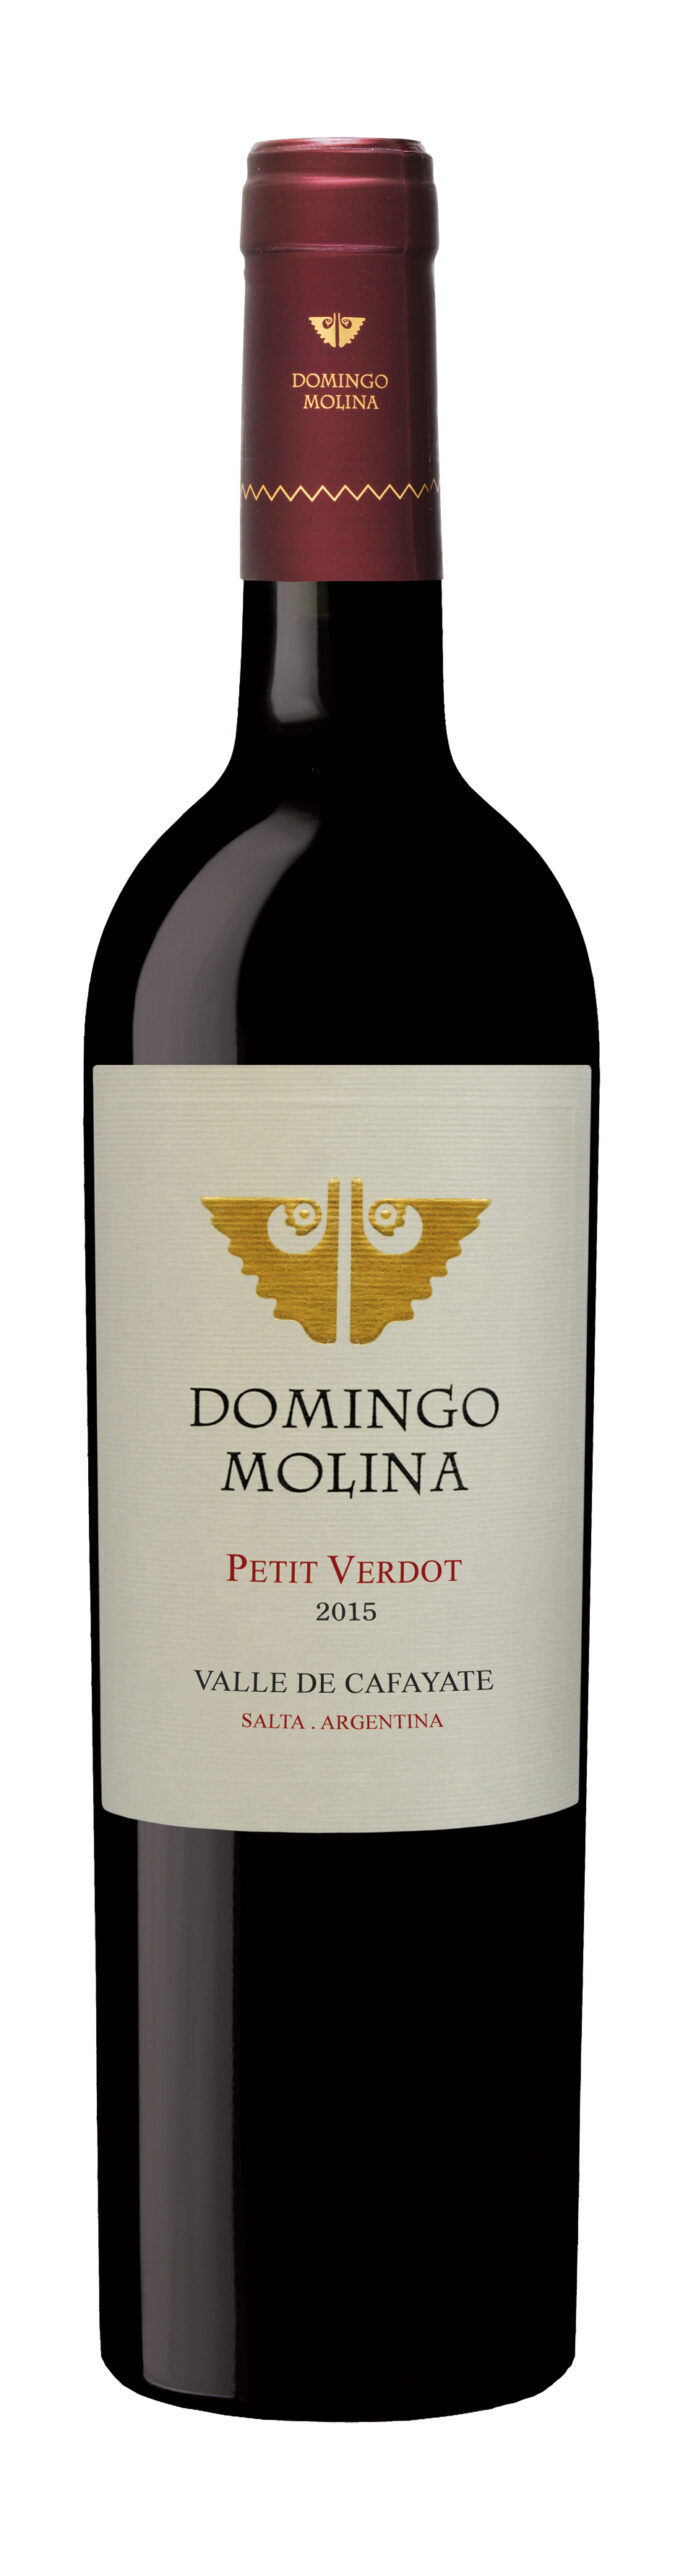 Domingo Molina Petit Verdot